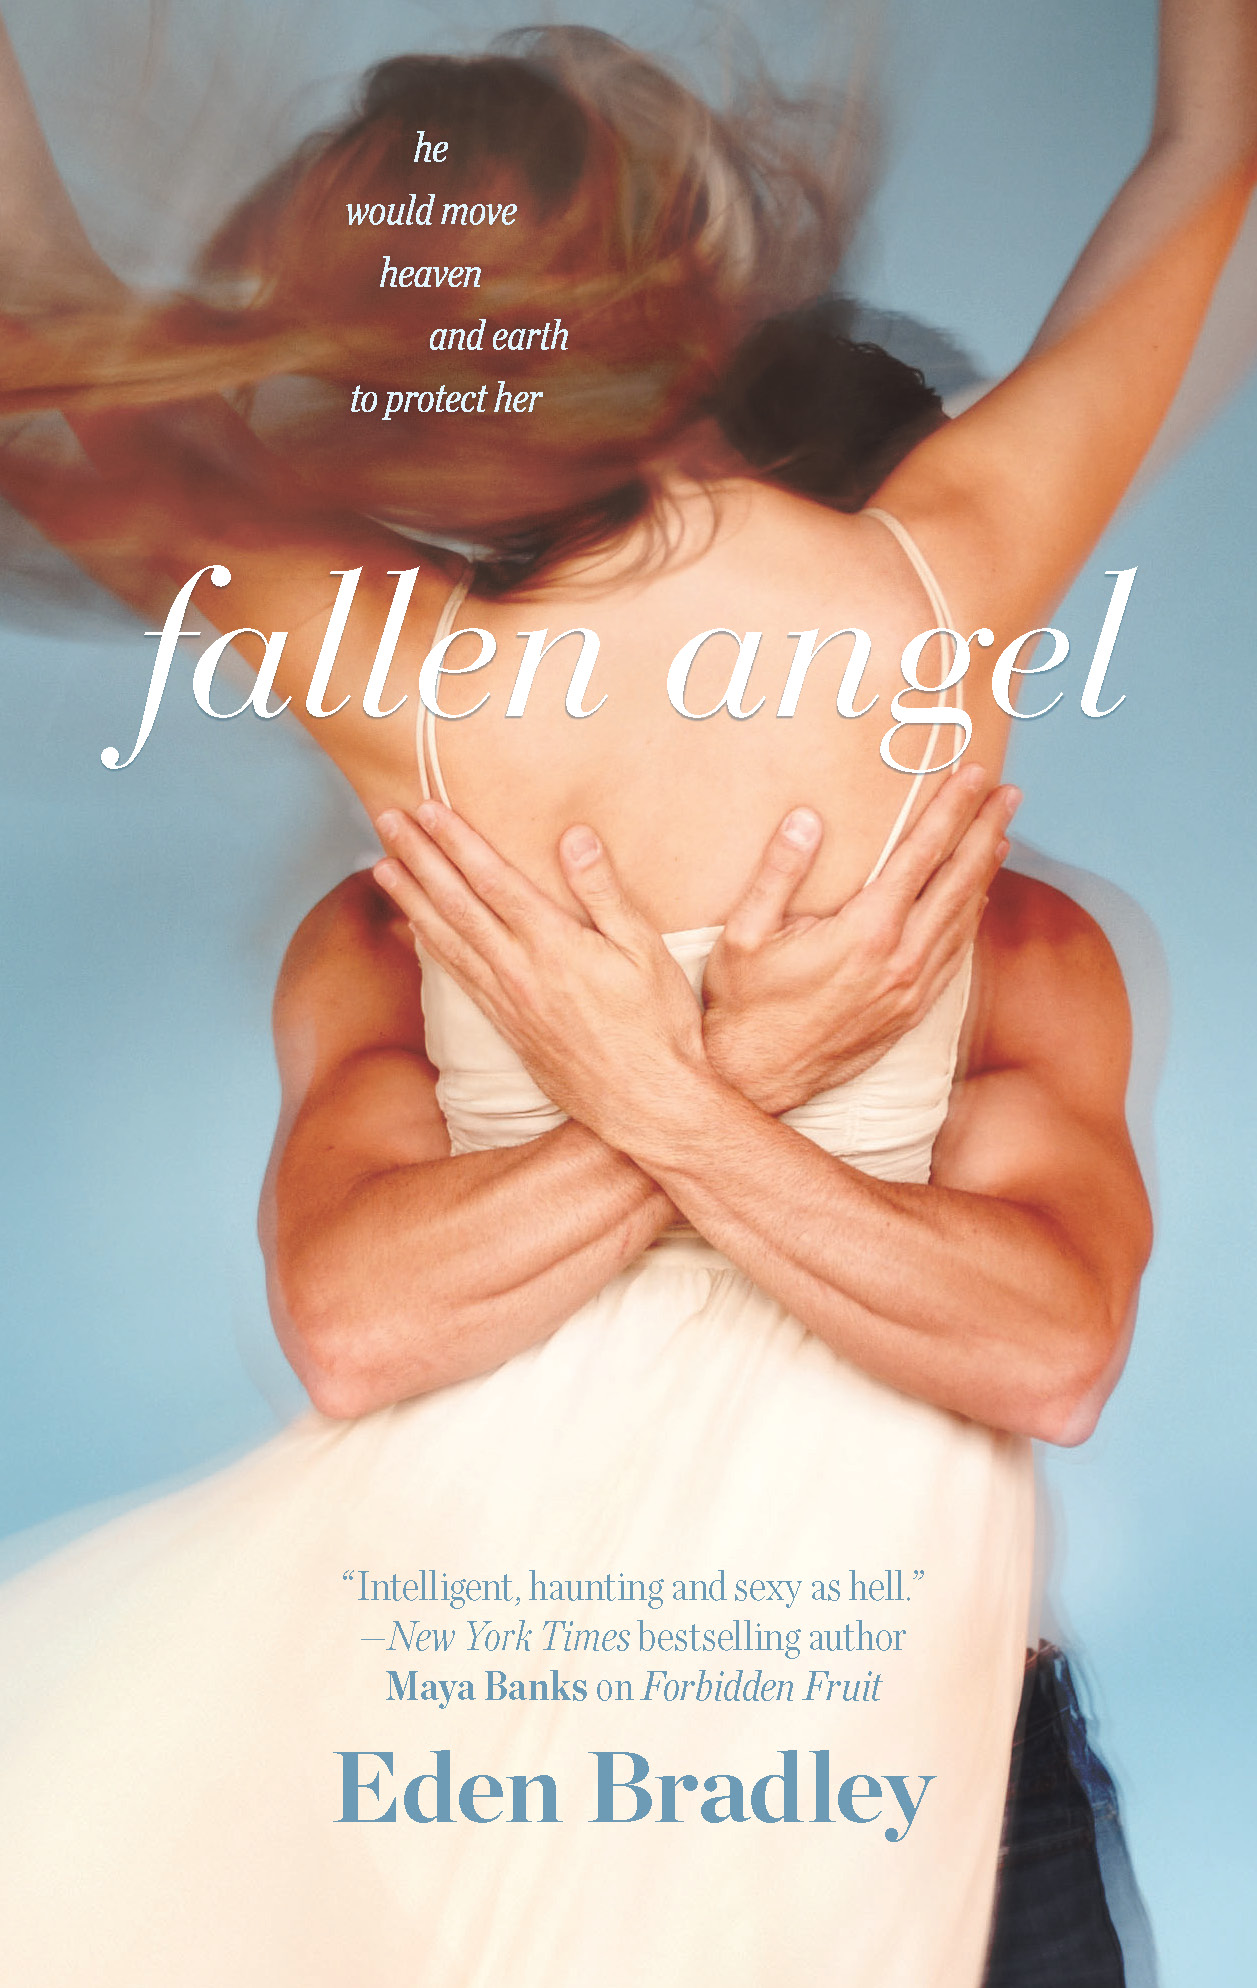 Fallen angel cover image